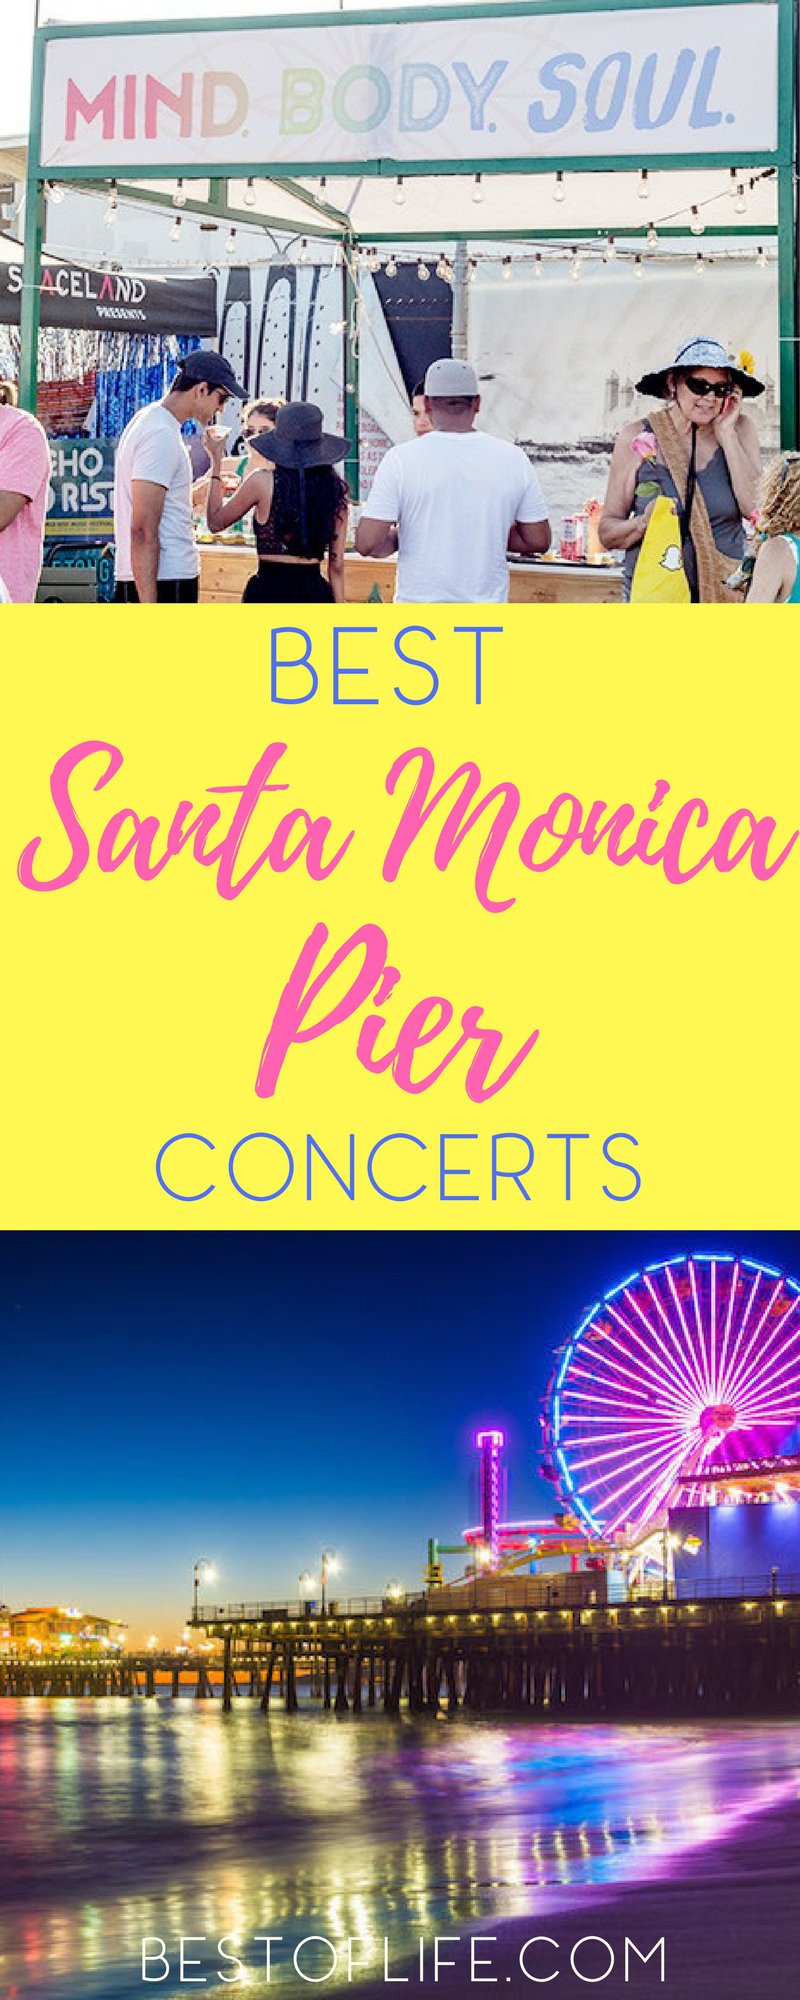 Santa Monica Pier Concerts August 2017 The Best of Life